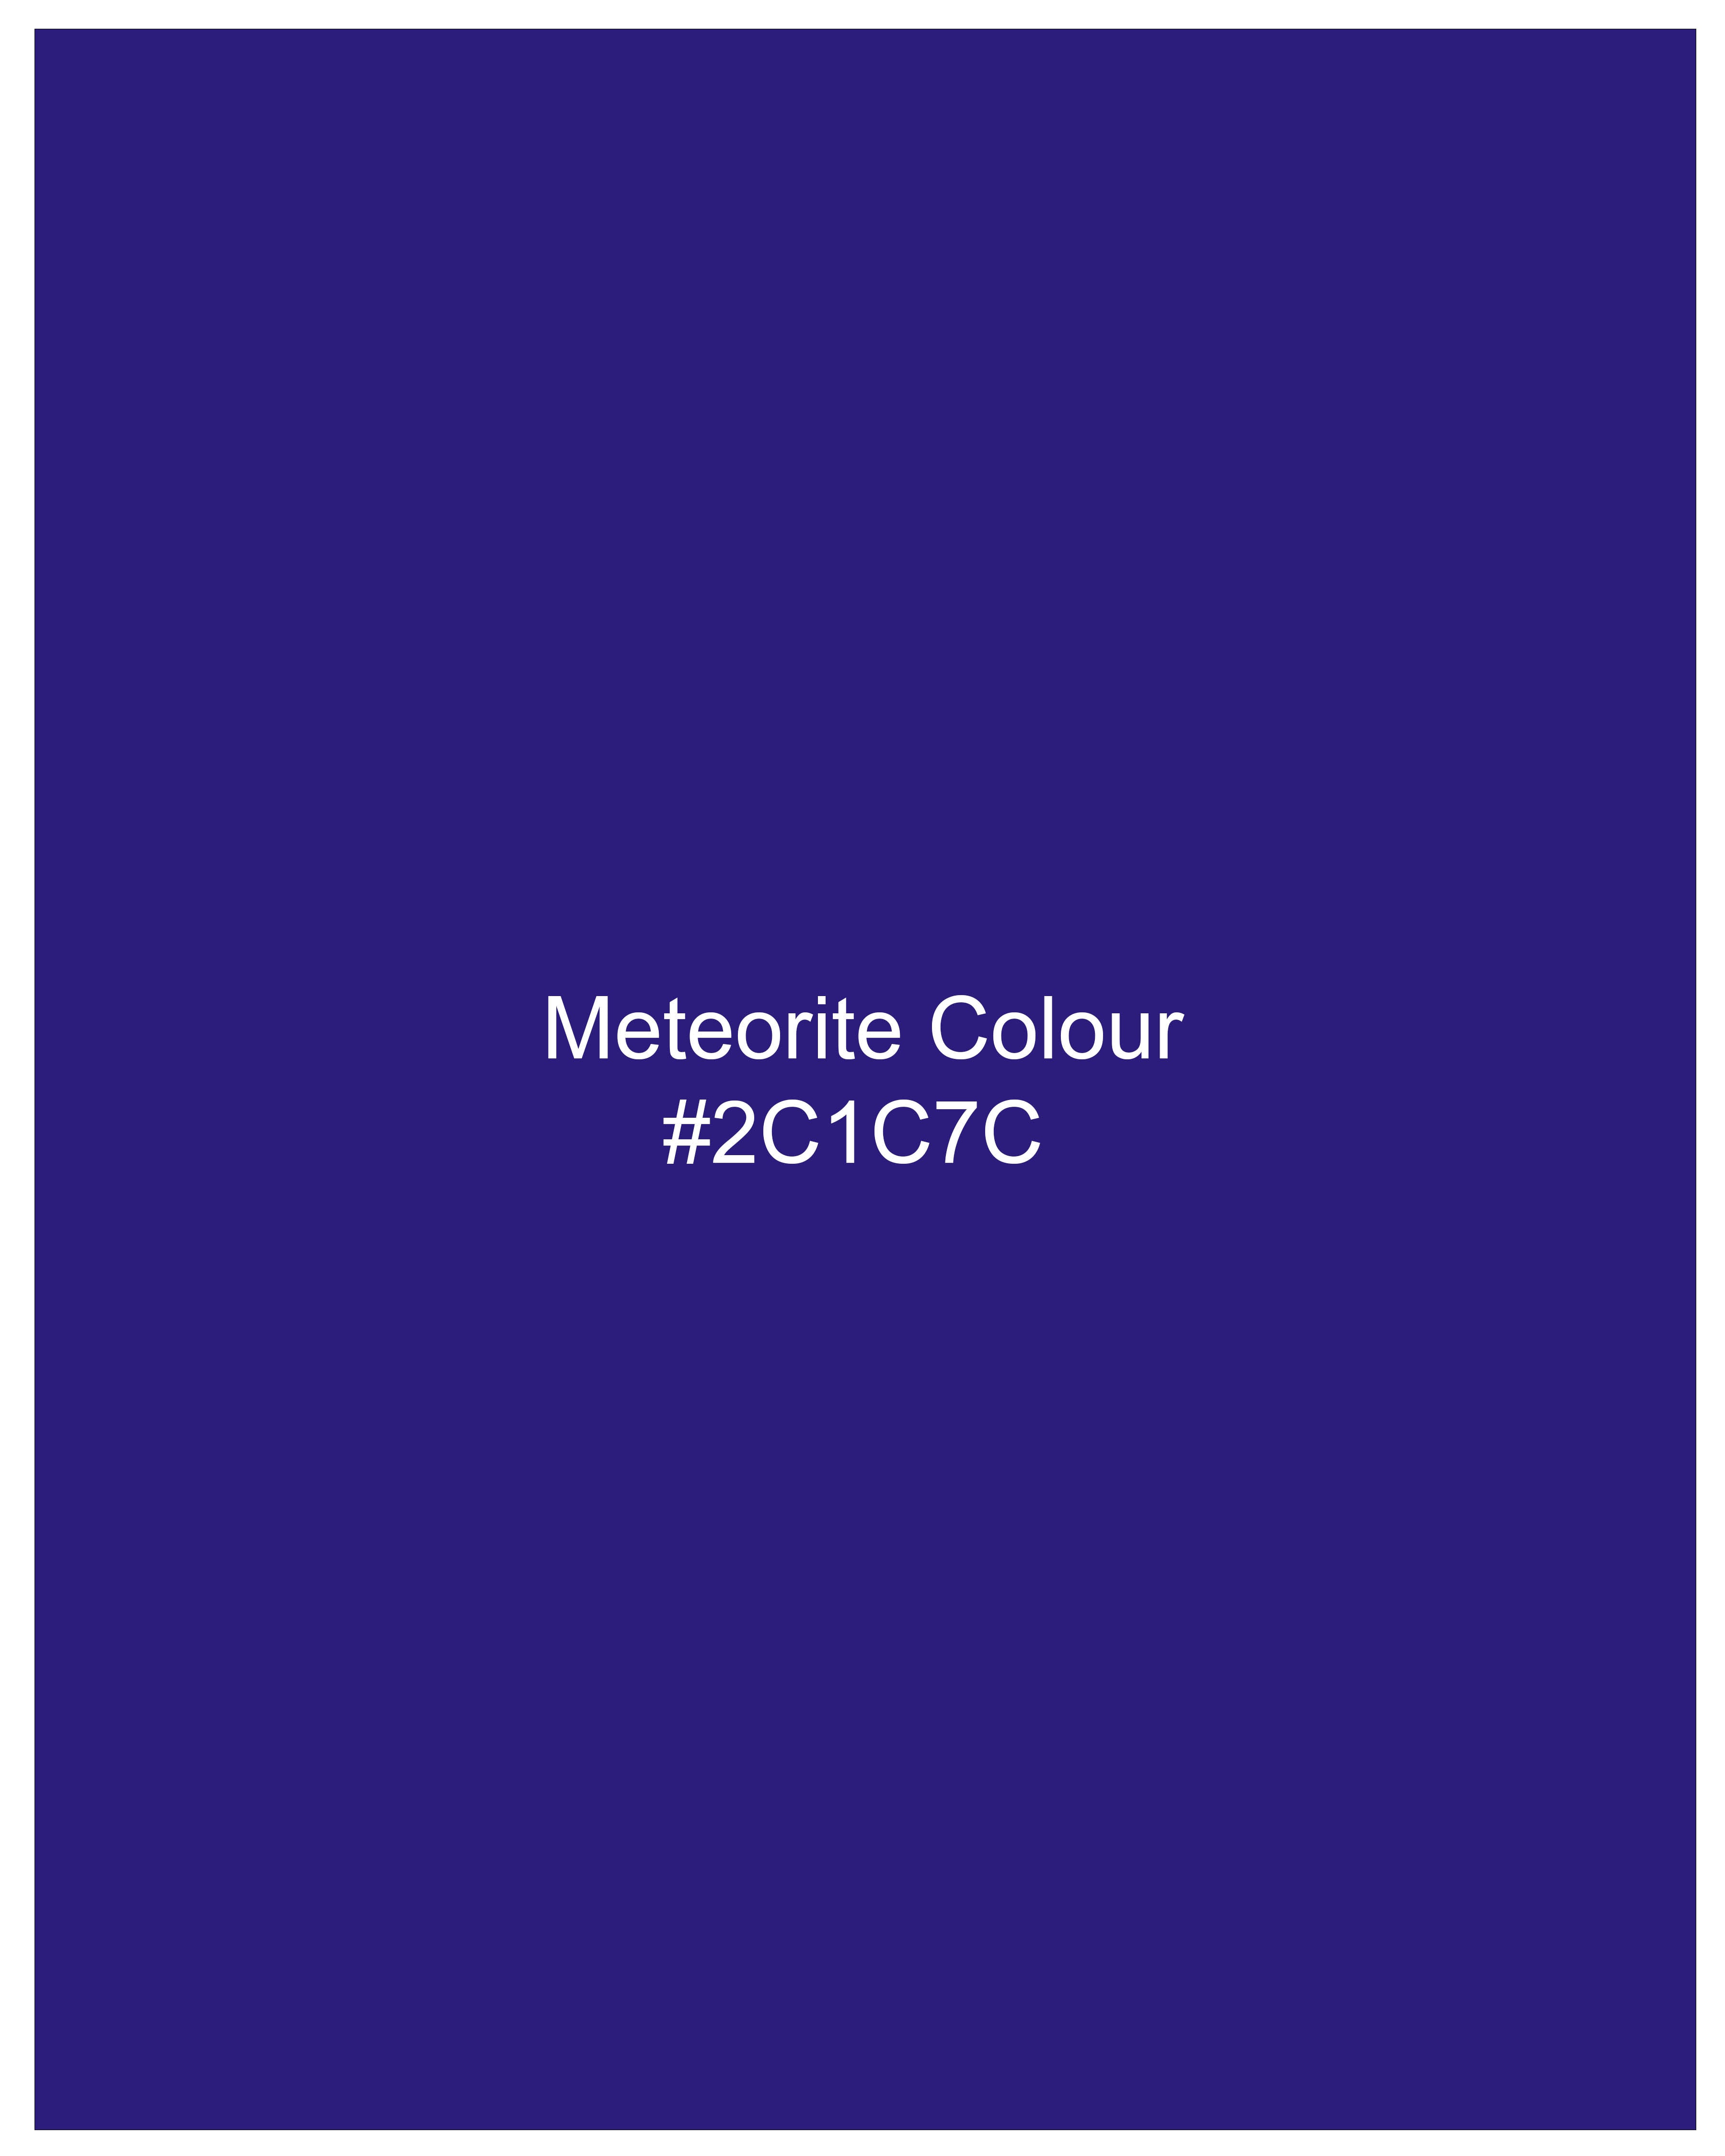  Meteorite Dark Blue Super Soft Premium Cotton Shirt 9930-KS-38, 9929-CA-H-38, 9929-CA-39, 9929-CA-H-39, 9929-CA-40, 9929-CA-H-40, 9929-CA-42, 9929-CA-H-42, 9929-CA-44, 9929-CA-H-44, 9929-CA-46, 9929-CA-H-46, 9929-CA-48, 9929-CA-H-48, 9929-CA-50, 9929-CA-H-50, 9929-CA-52, 9929-CA-H-52